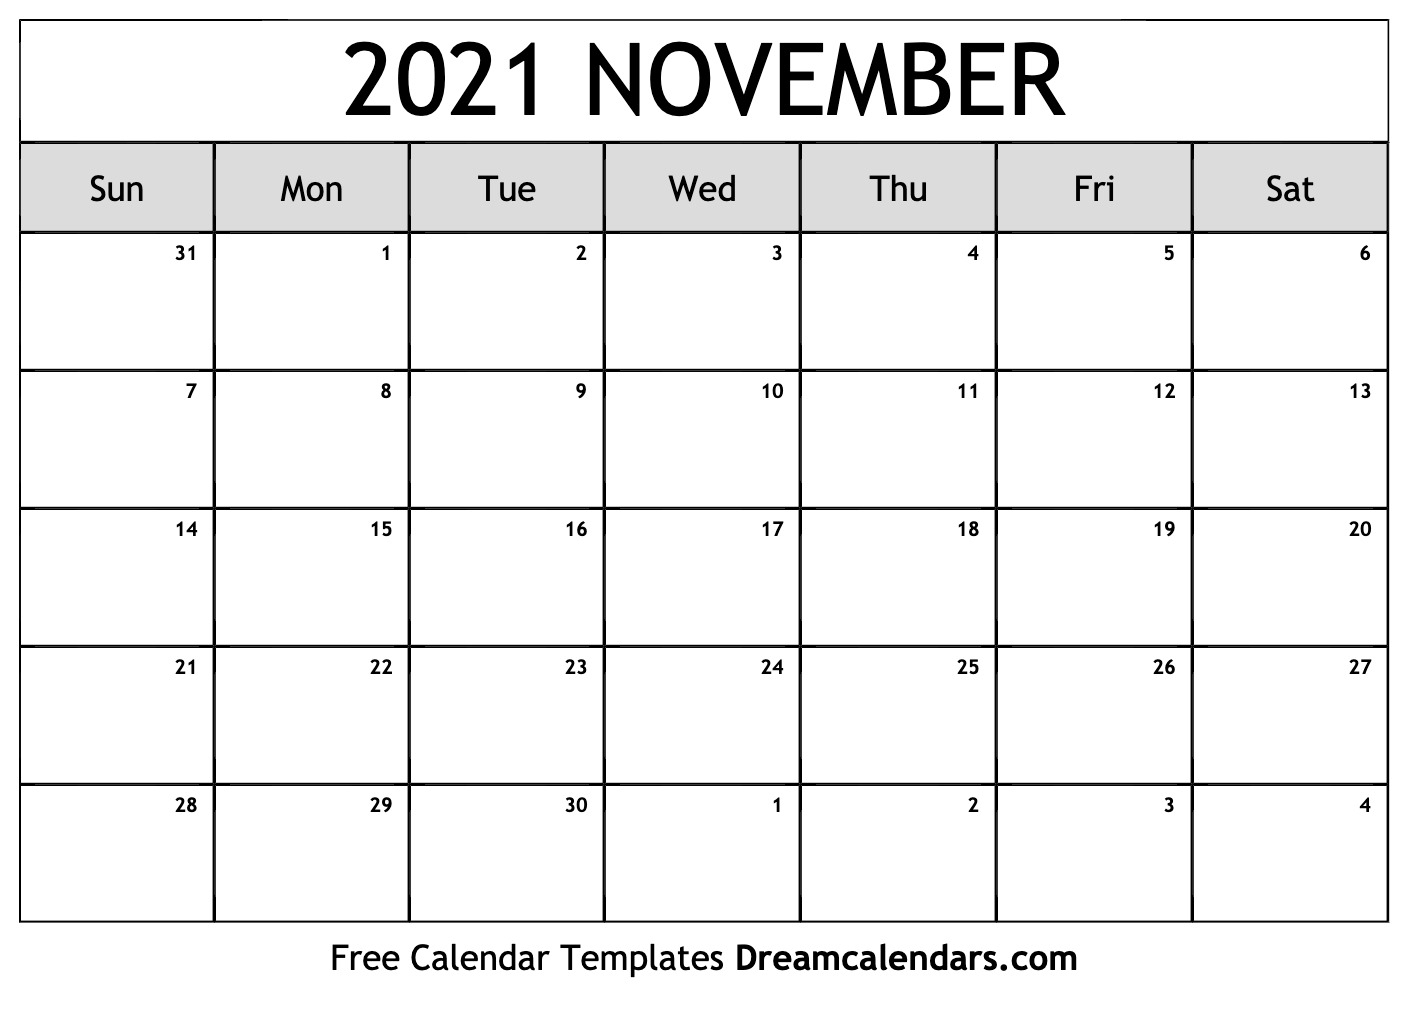 Get 2021 November Calendar Free Image